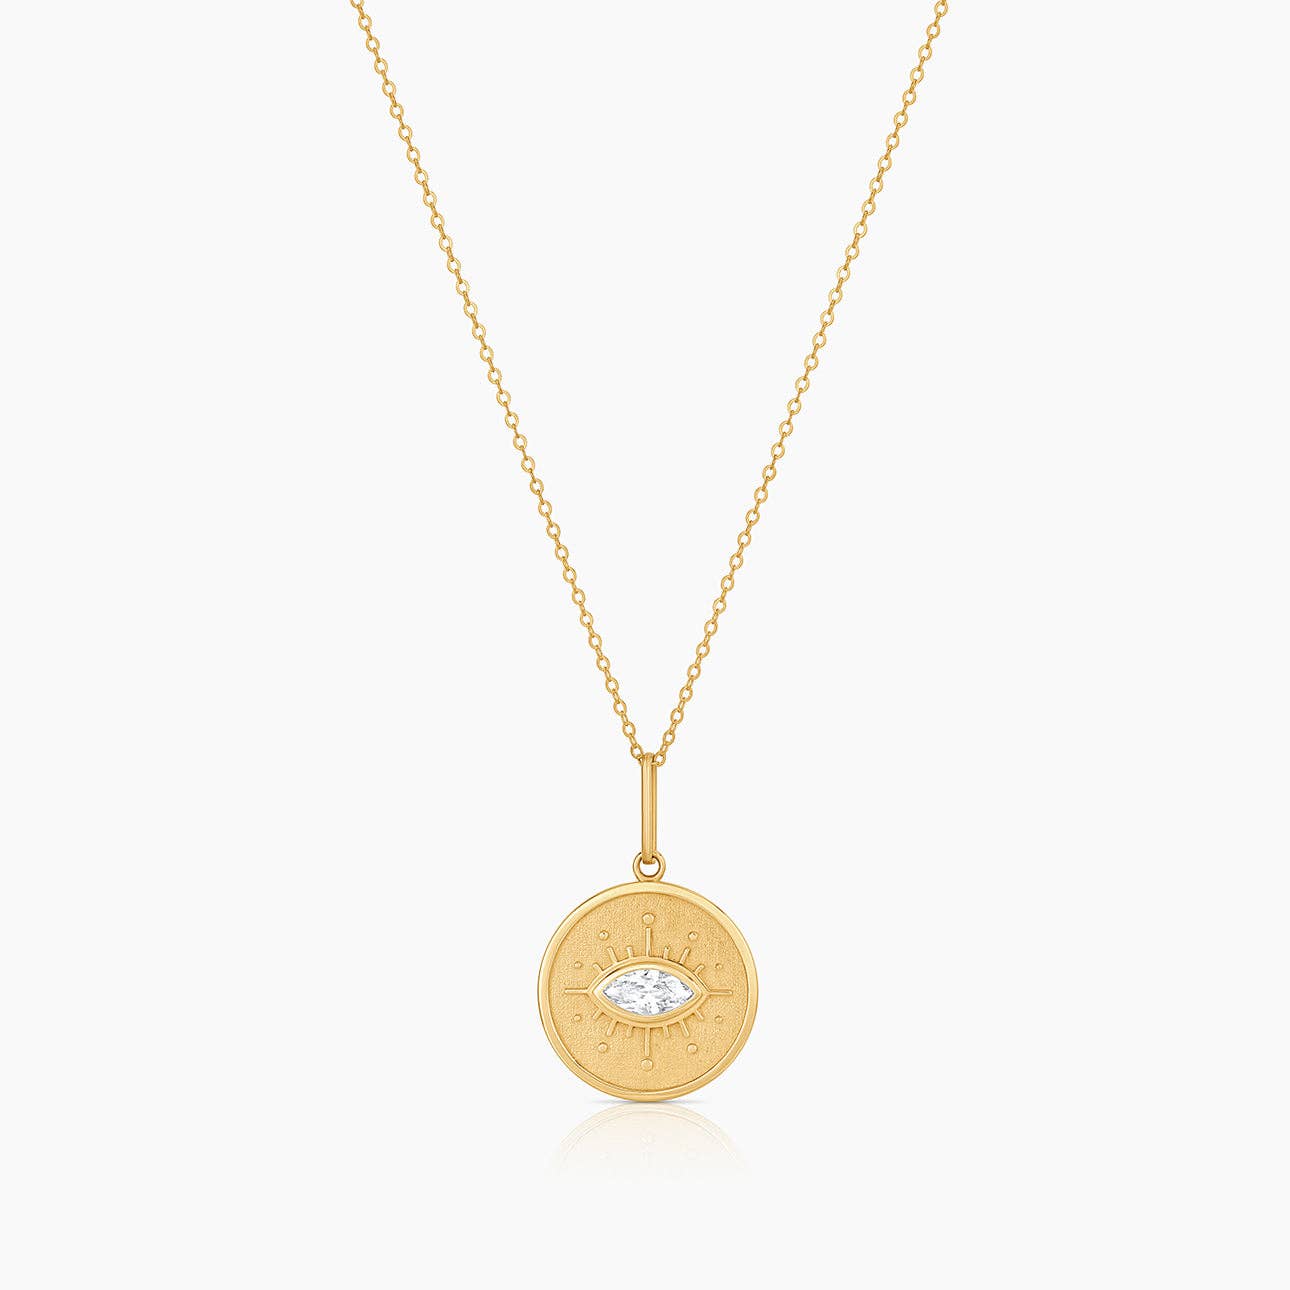 Talisman Necklace - Abigail Fox Designs